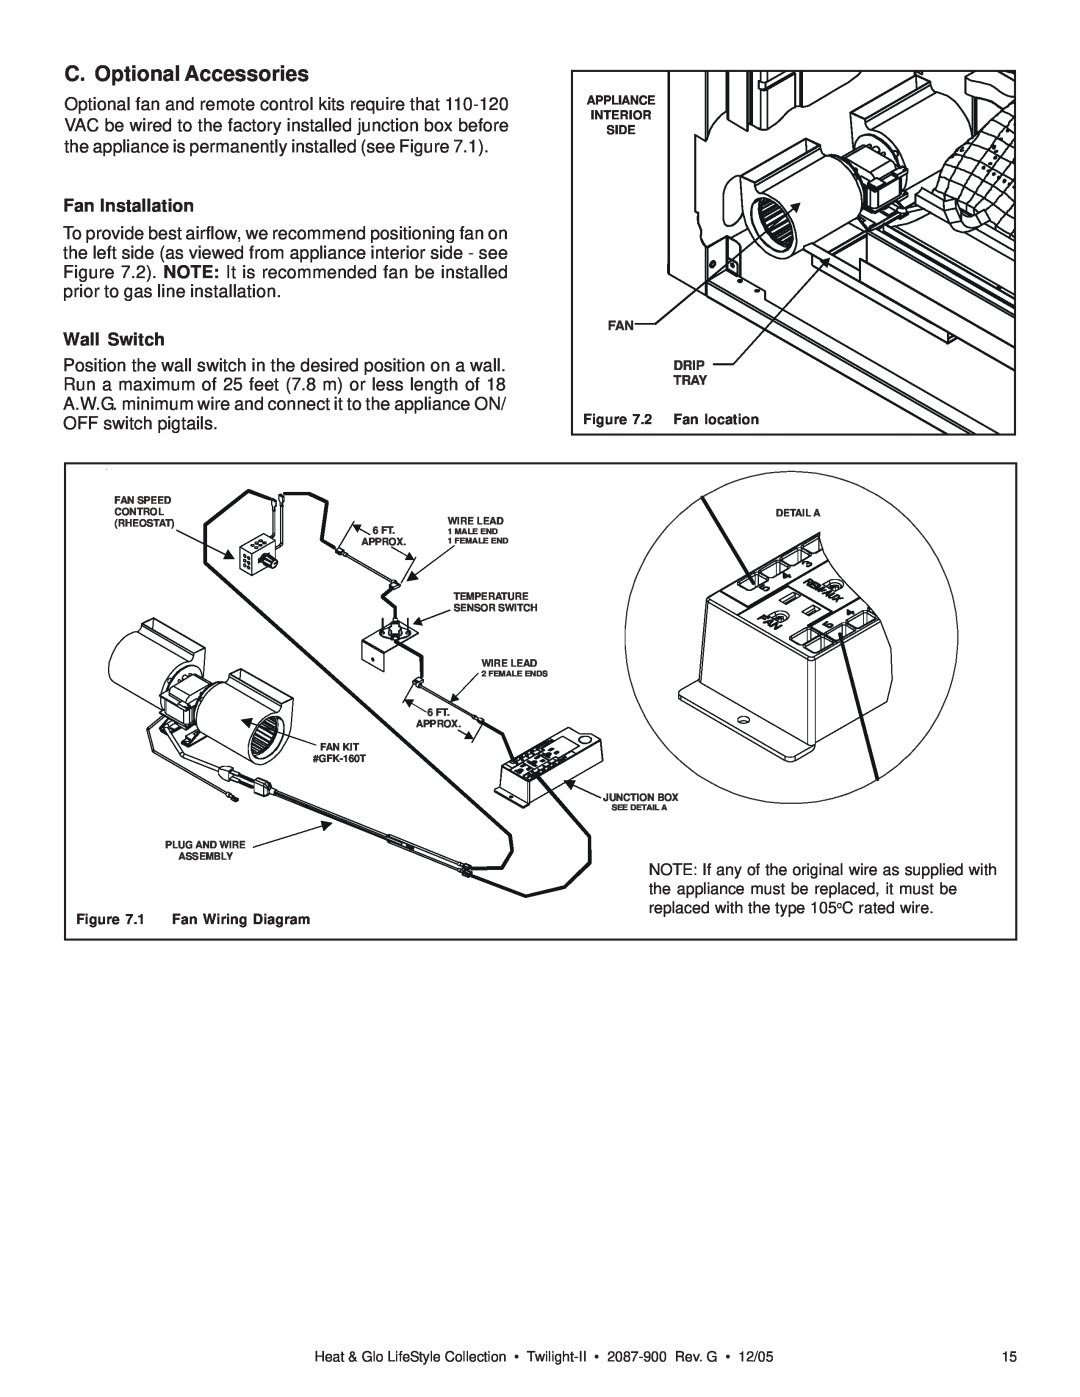 Heat & Glo LifeStyle TWILIGHT-II owner manual C. Optional Accessories, Fan Installation, Wall Switch 